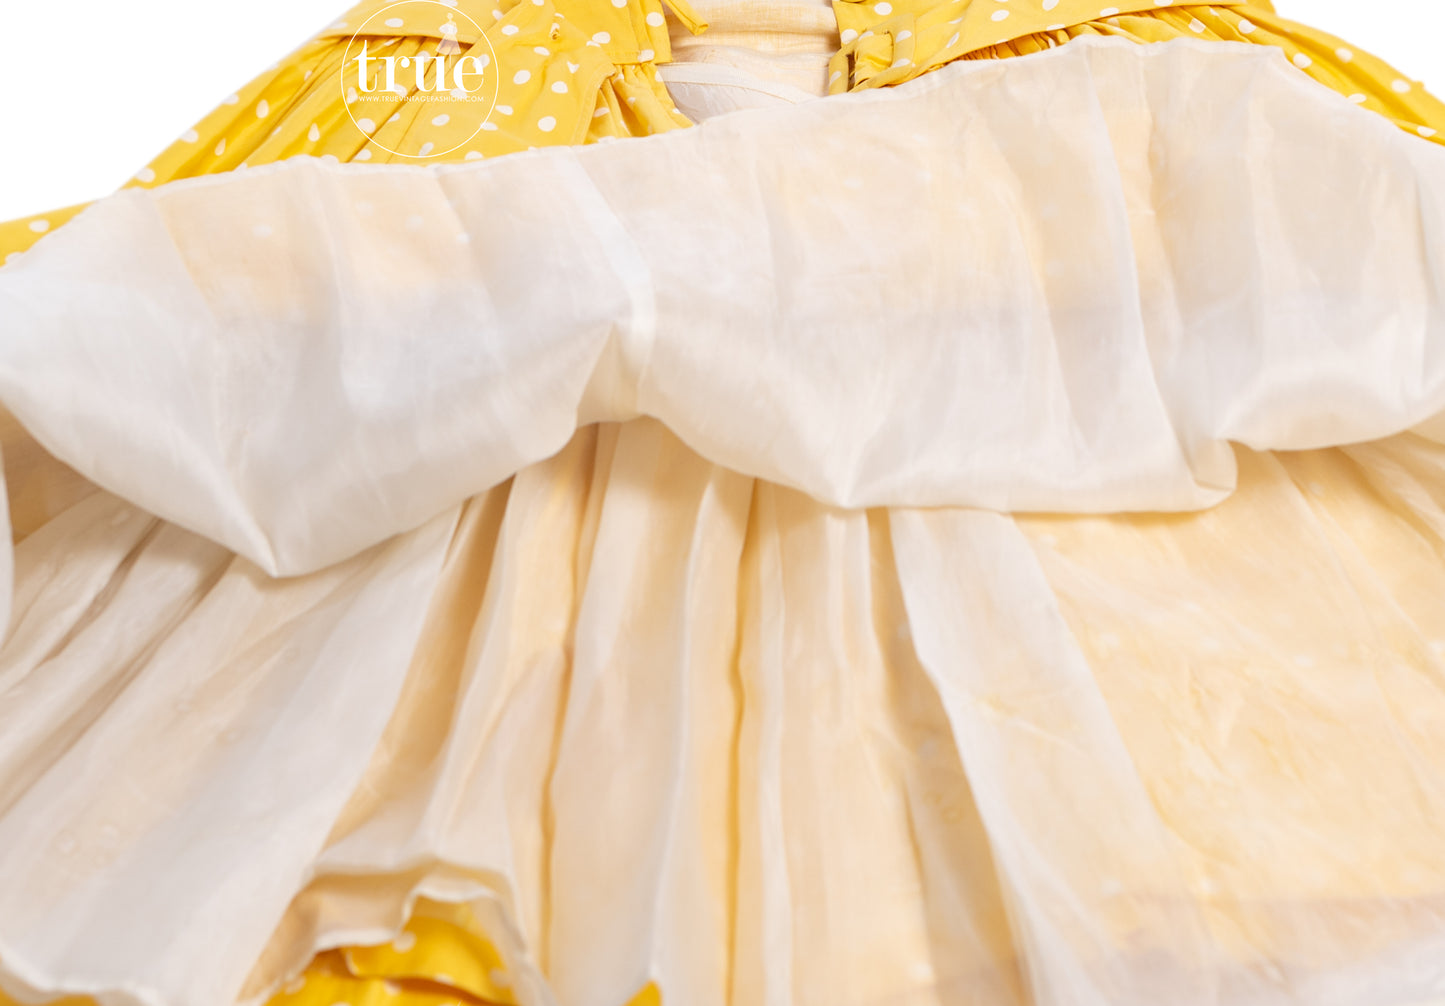 1950's Suzy Perette yellow polka dot dress